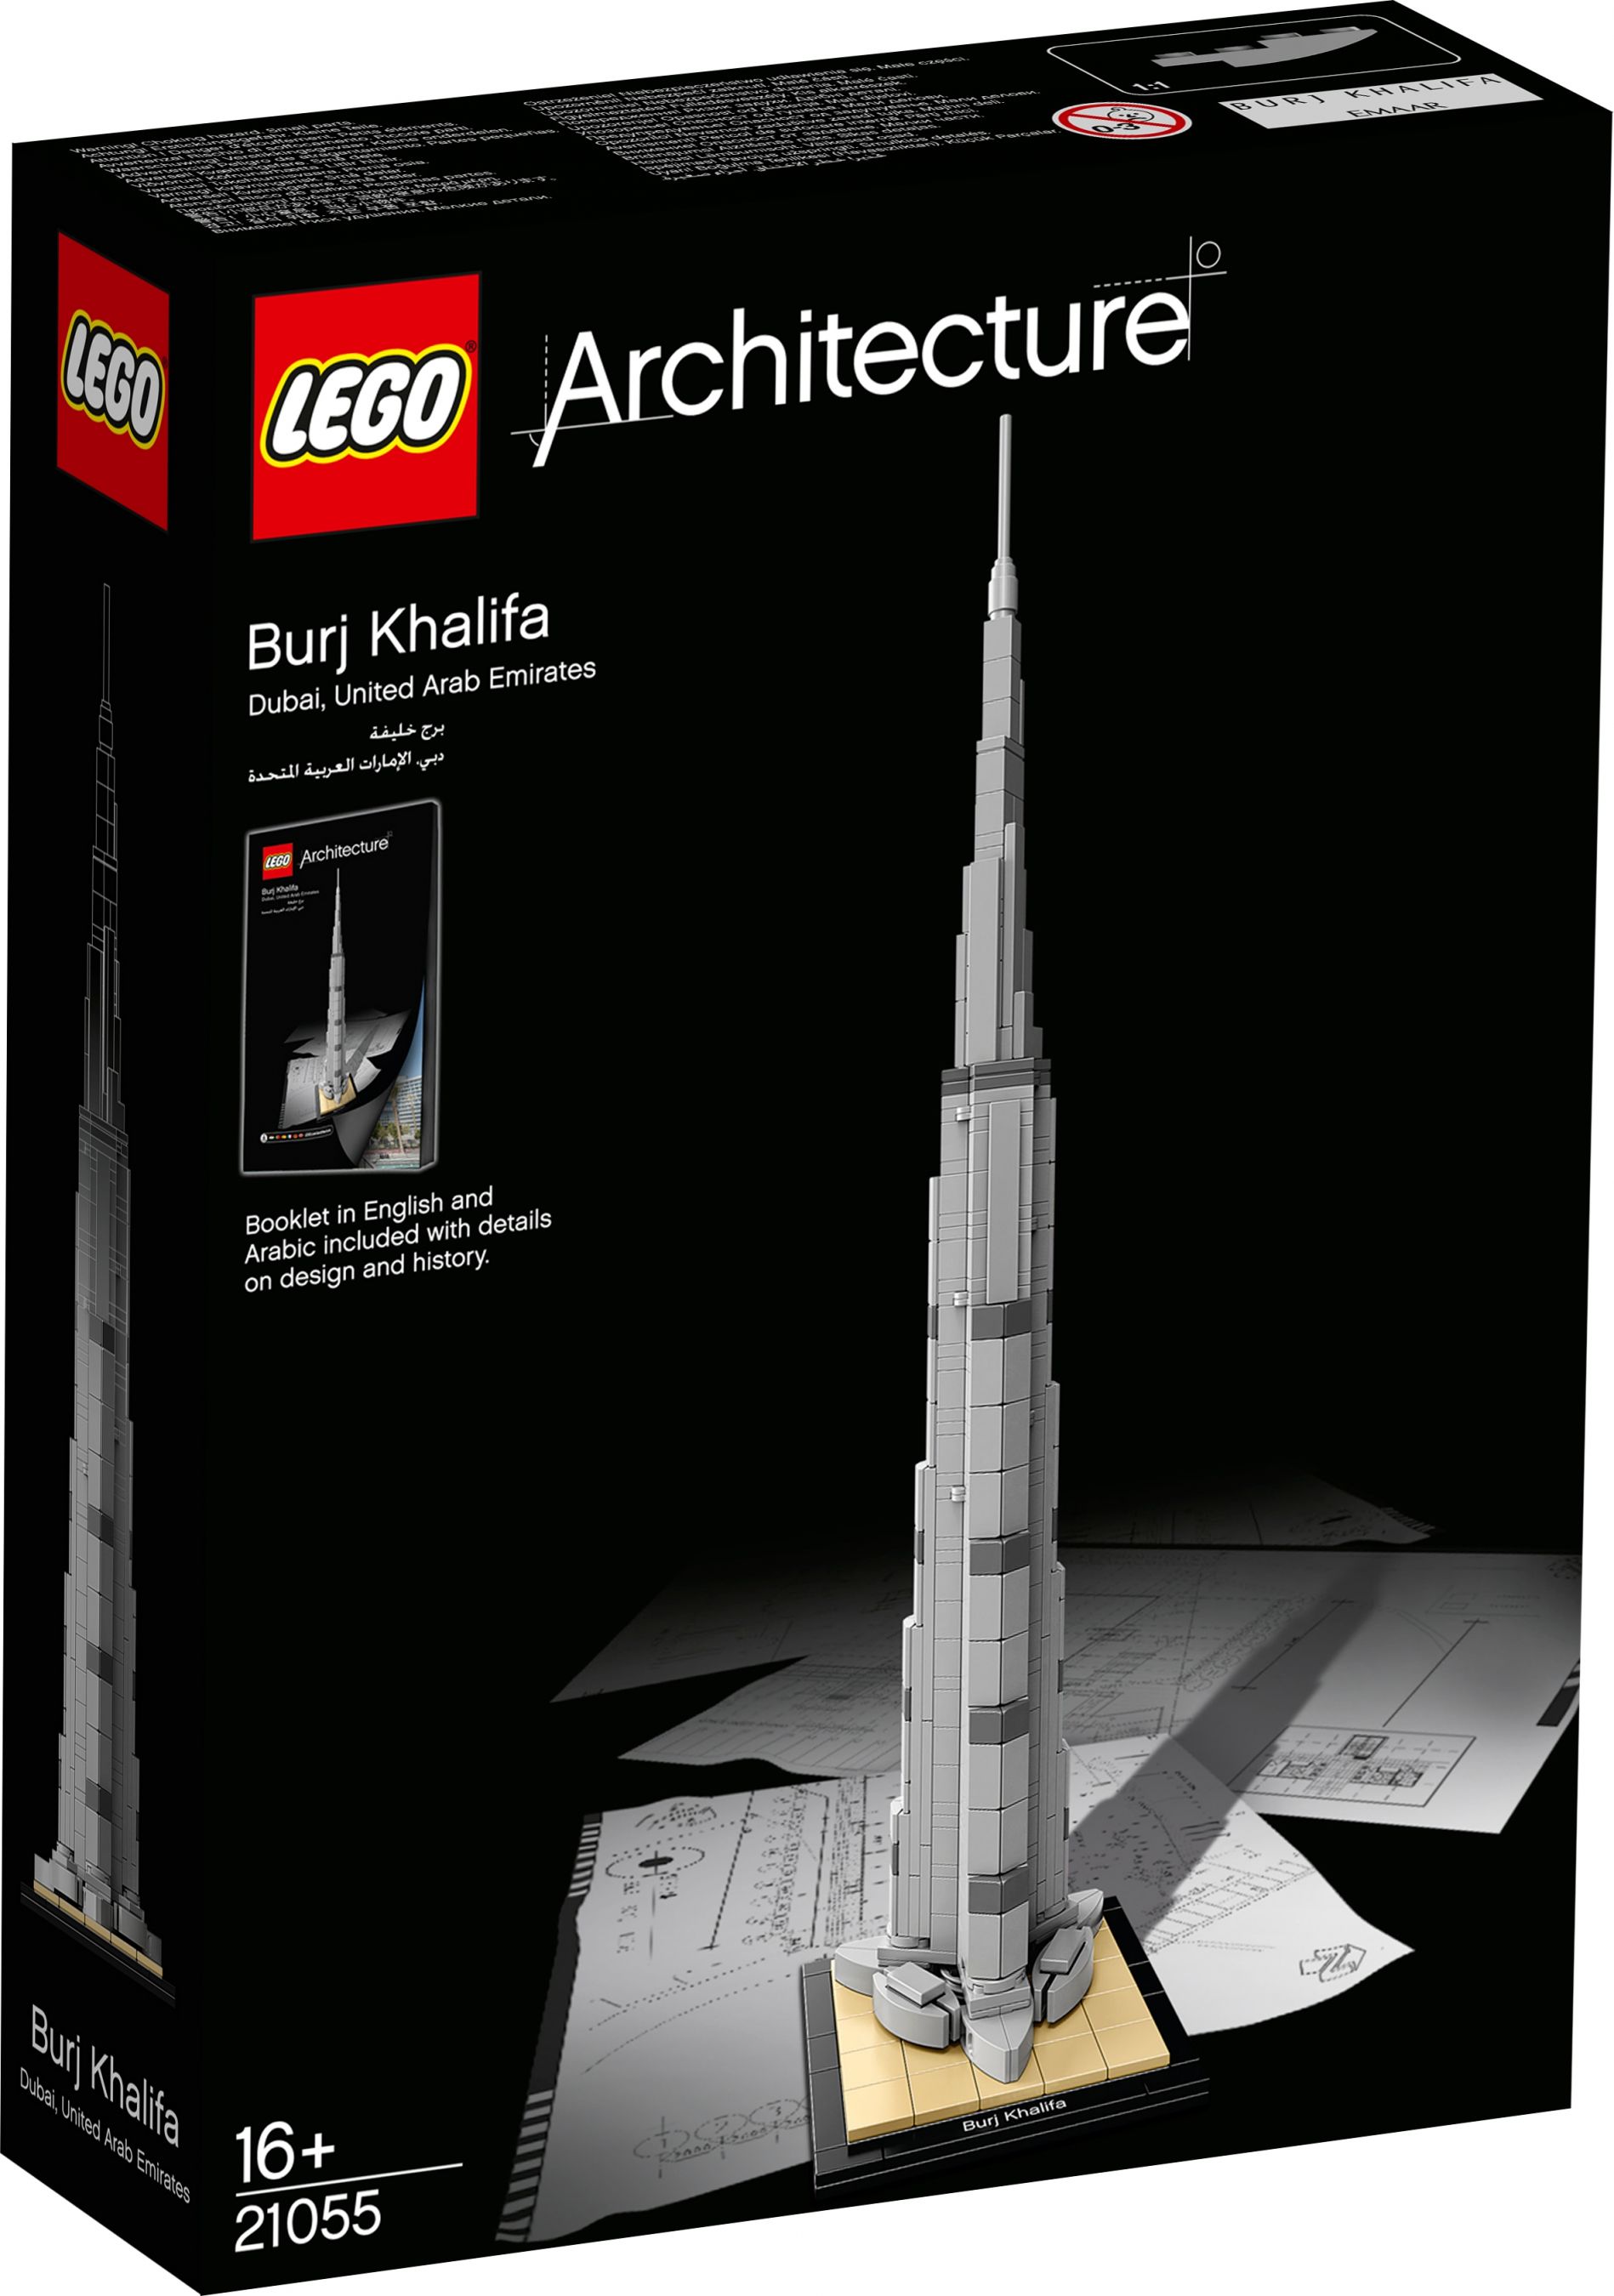 LEGO Architecture 21055 Burj Khalifa LEGO_21055_alt1.jpg